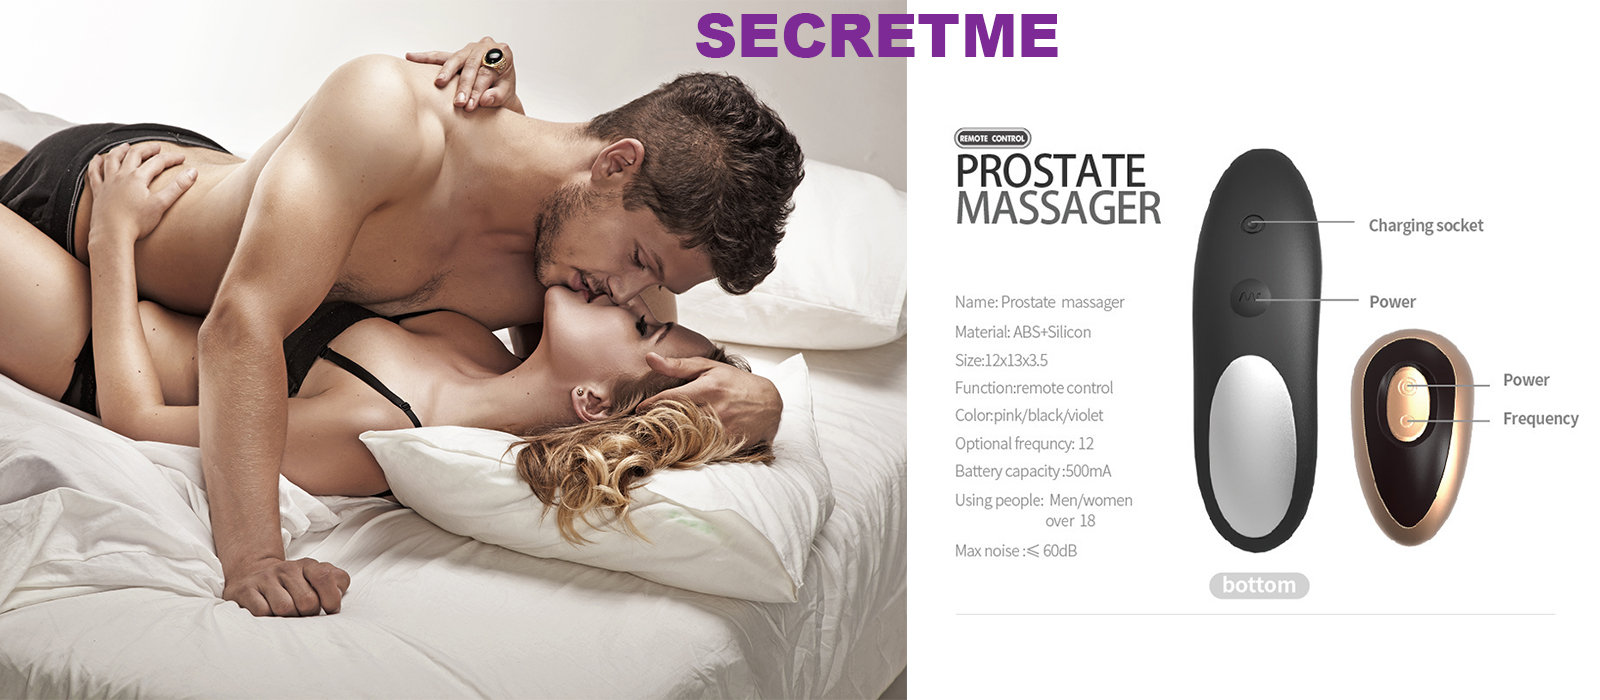 Prostate Massager (11)